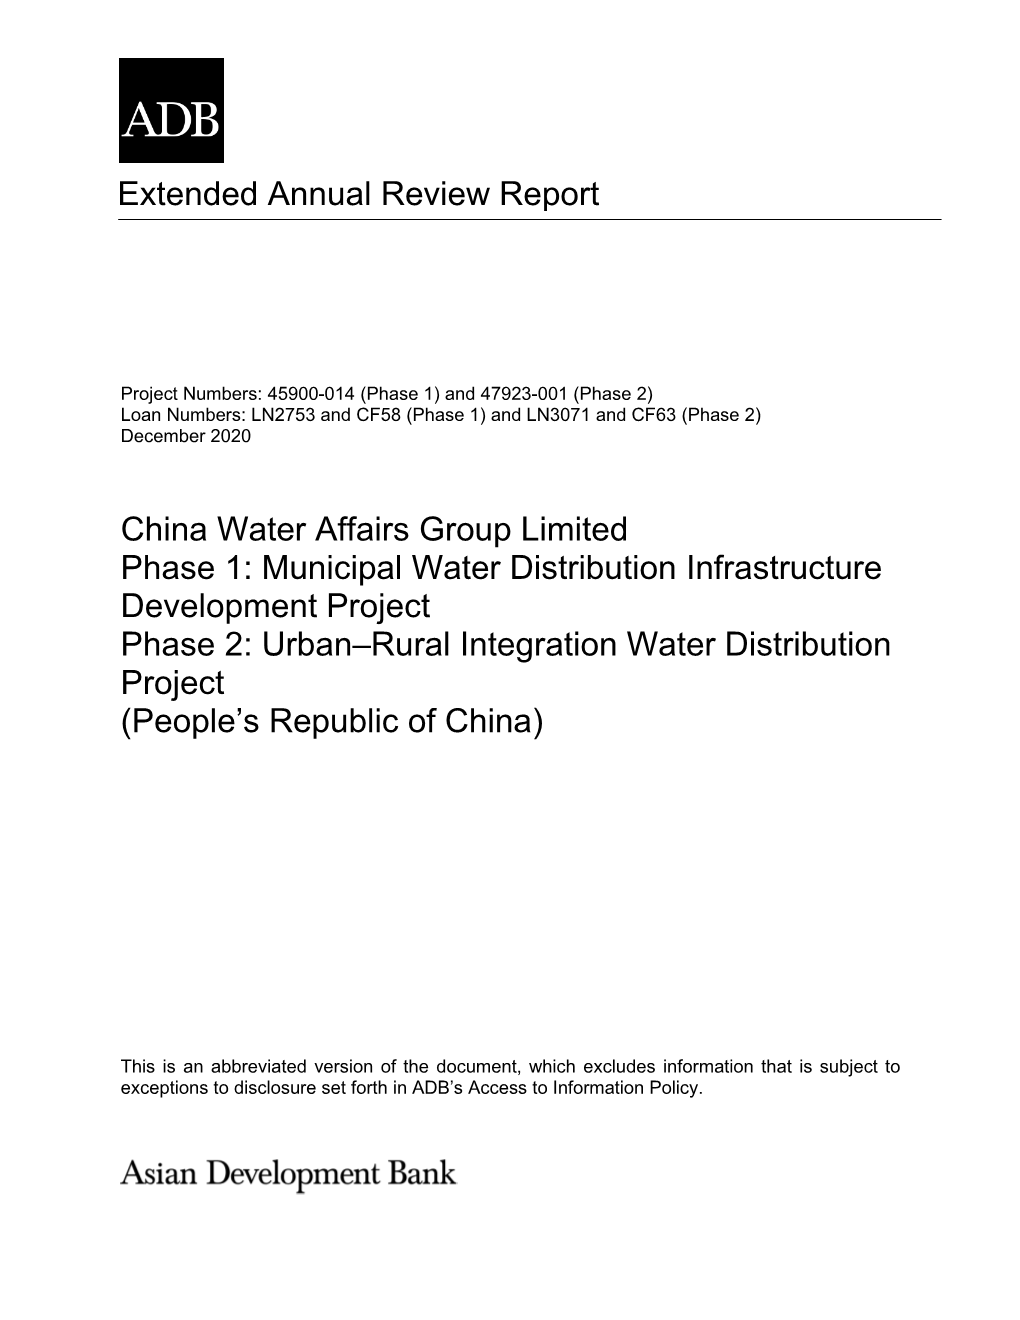 45900-014: Municipal Water Distribution Infrastructure